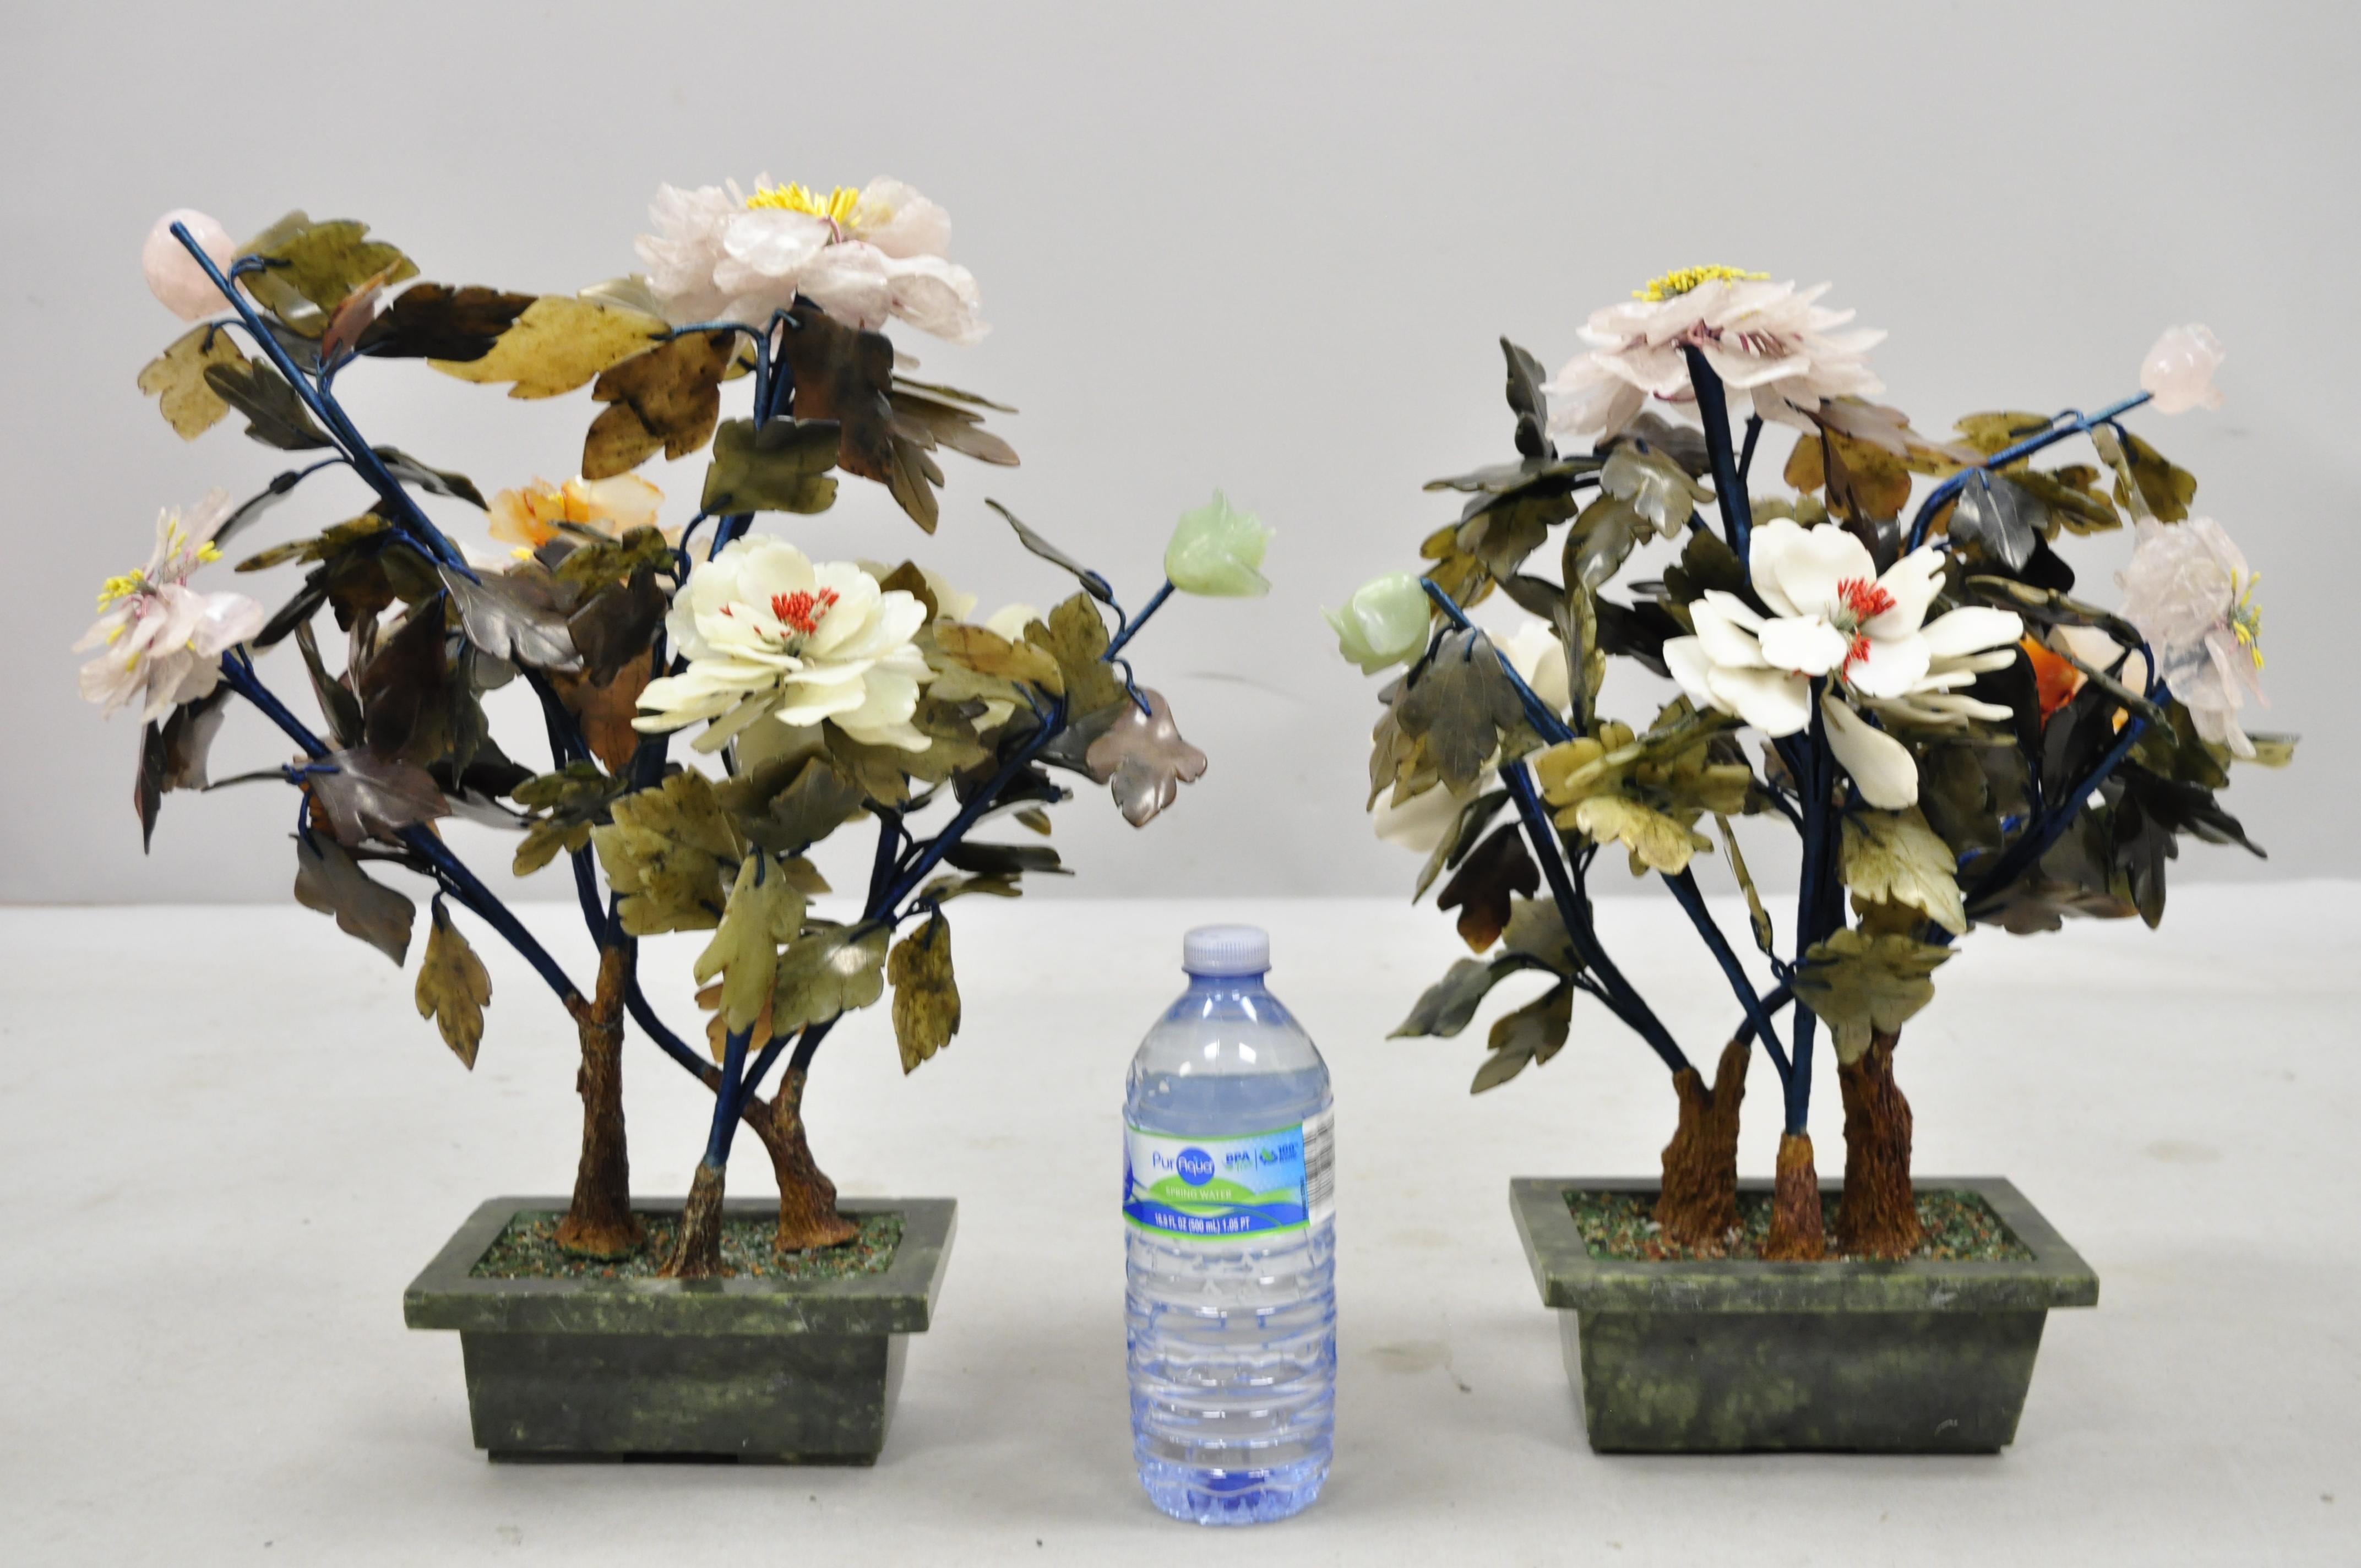 Pair of Vintage Glass and Soapstone Flower Bonsai Tree Centerpiece Sculpture 2